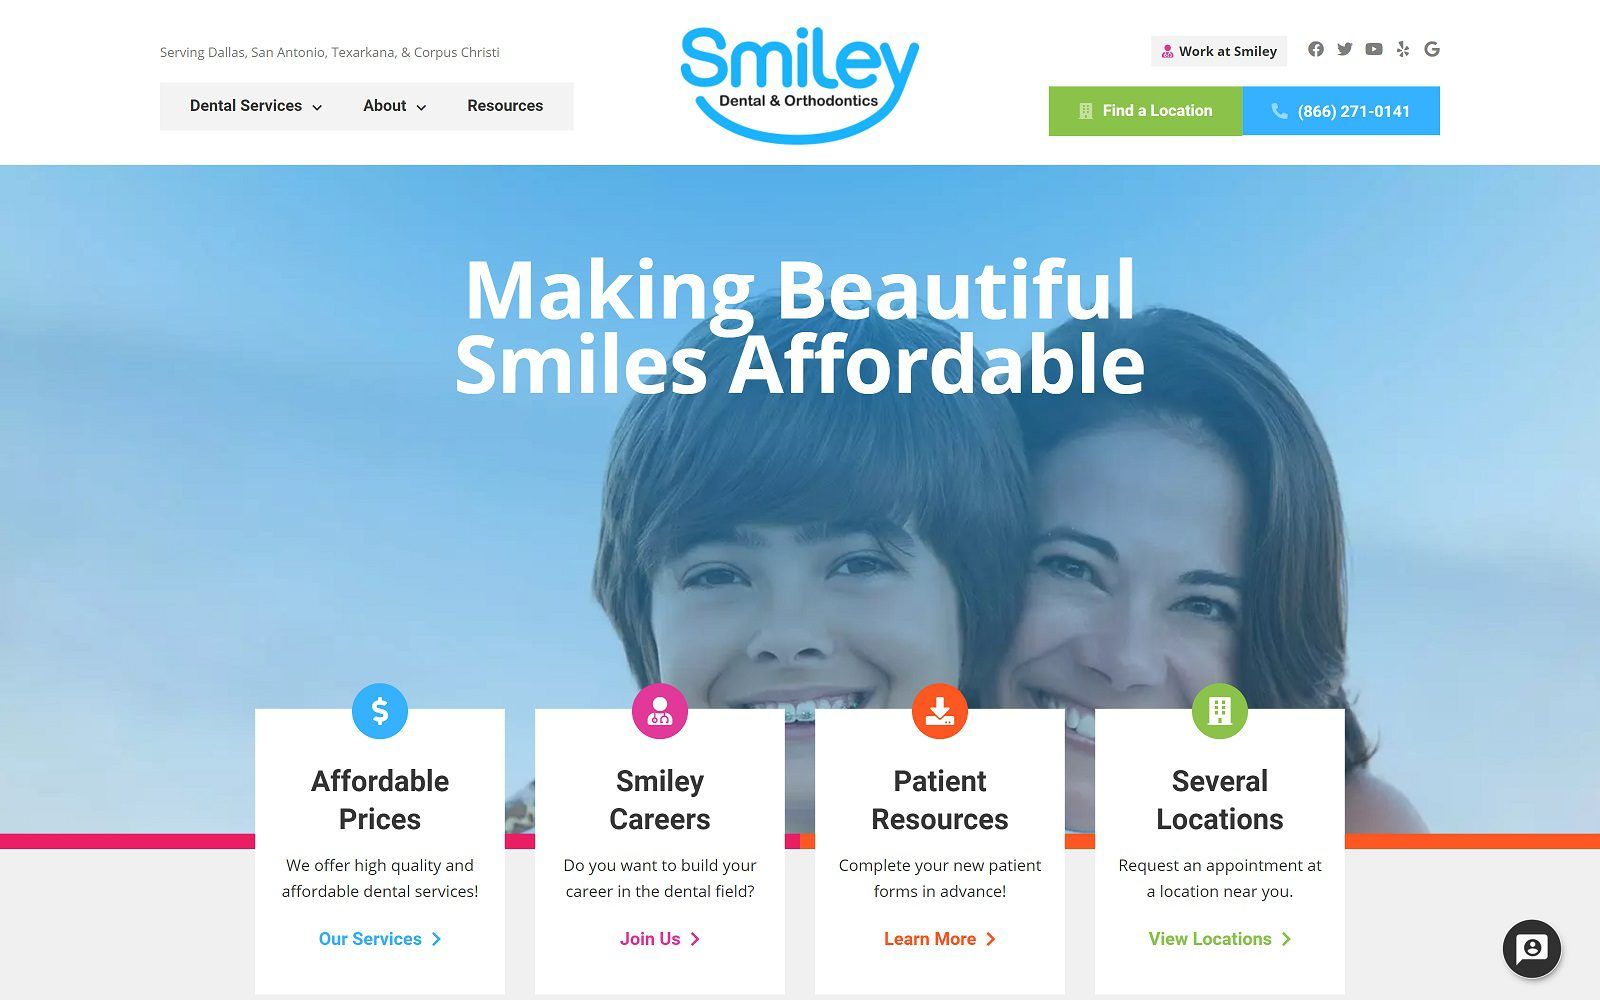 The screenshot of smiley dental & orthodontics website